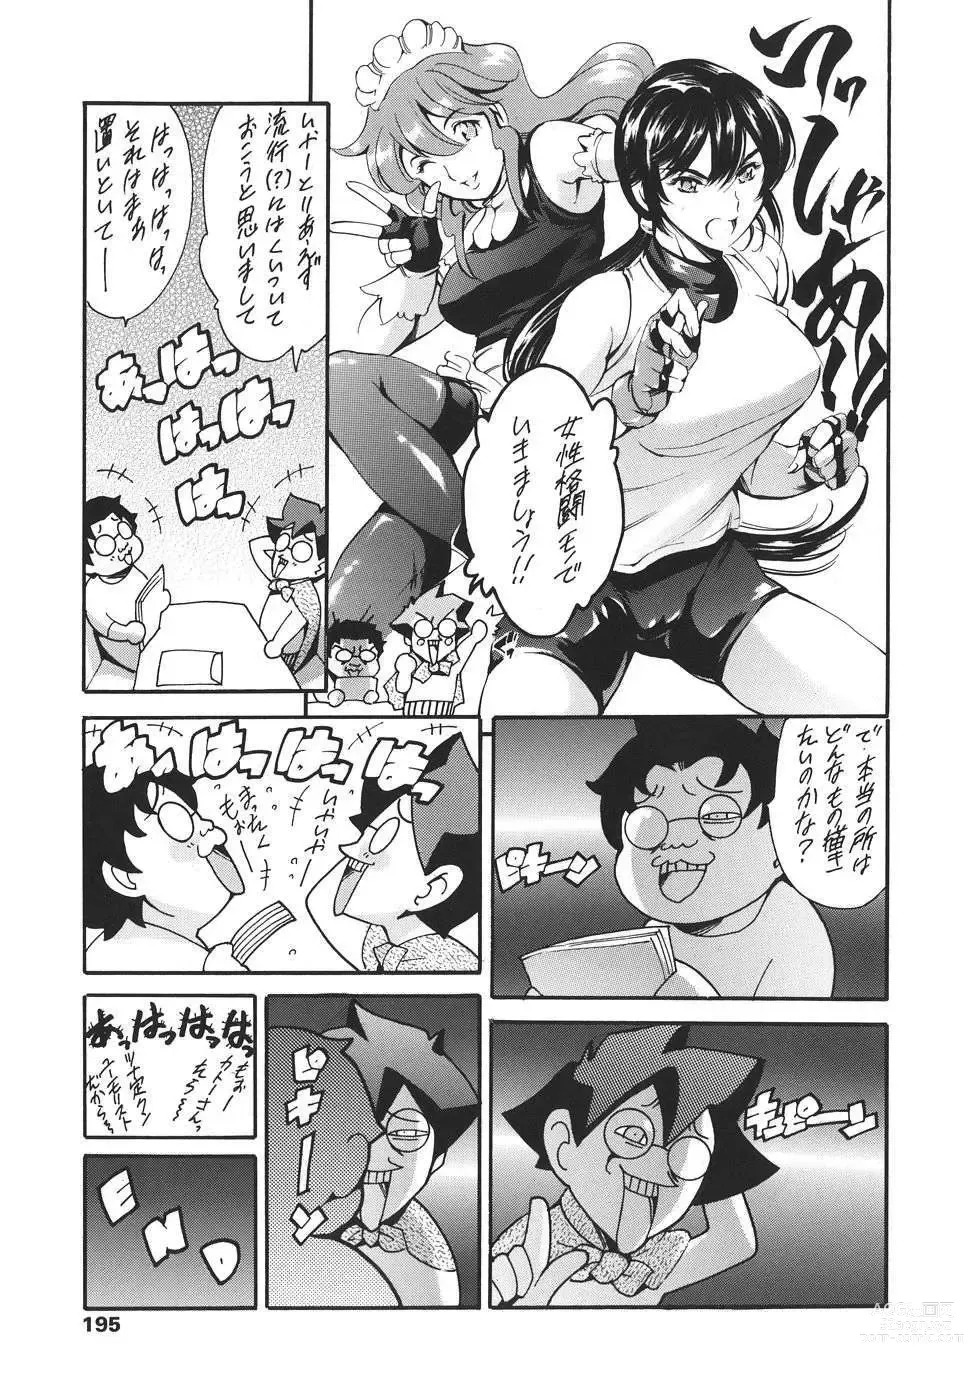 Page 195 of manga Katei no Jijou - Familys circumstances